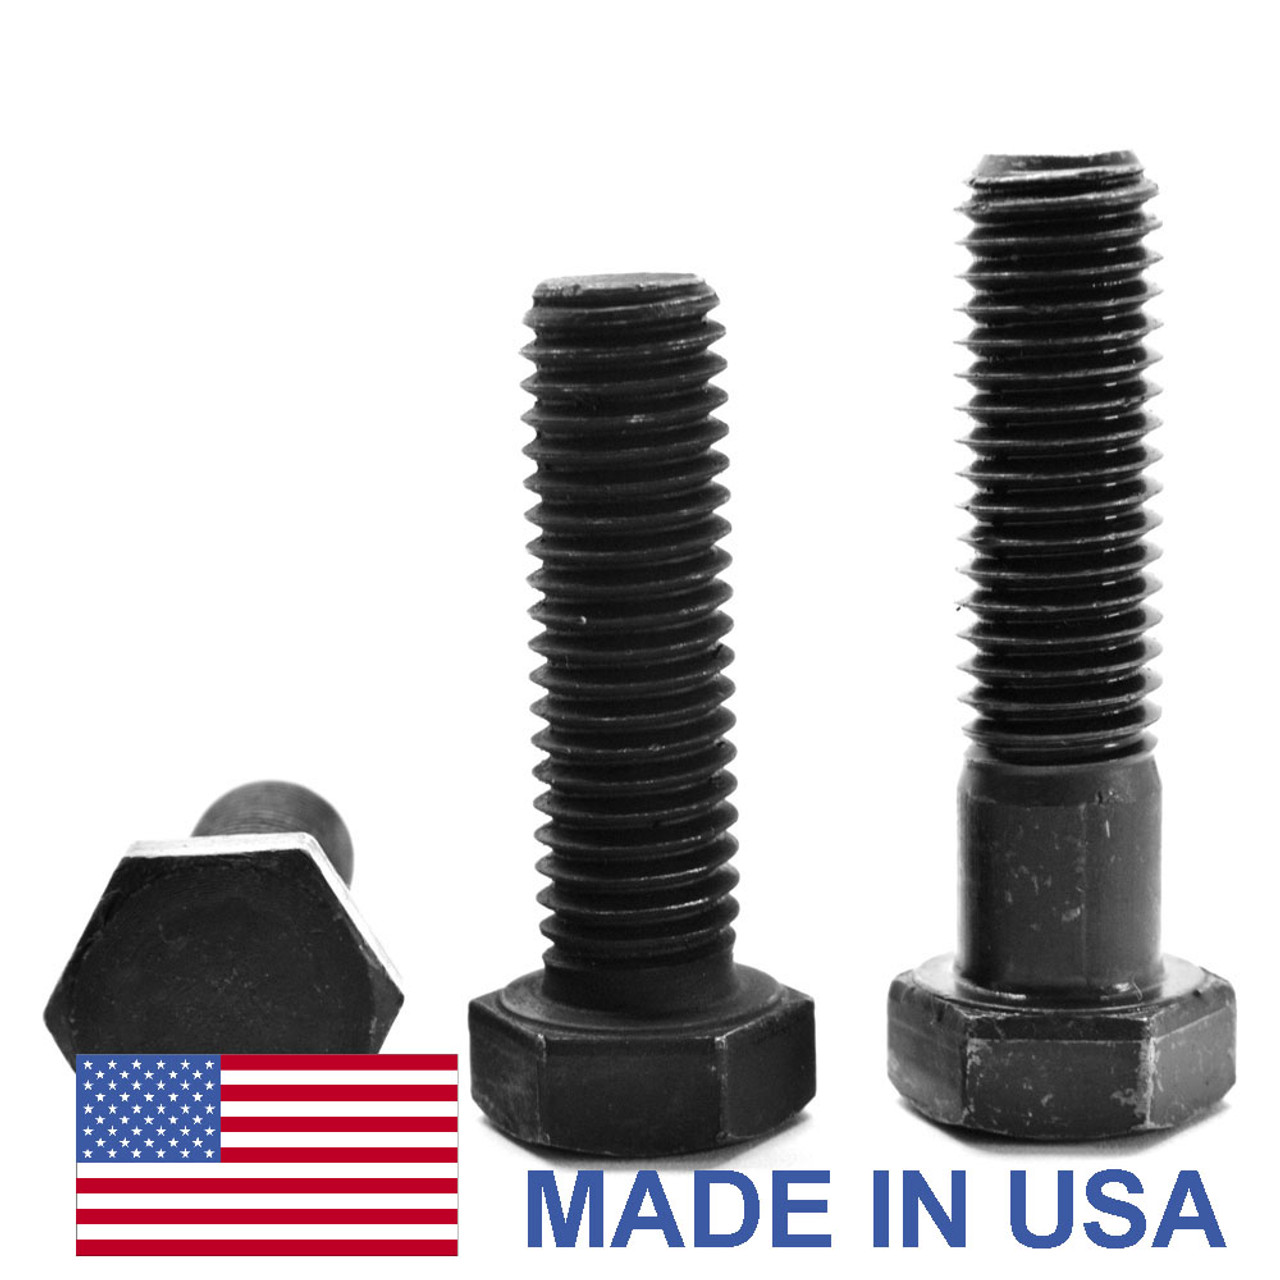 7/16"-14 x 1 1/2" (FT) Coarse Thread Grade 8 Hex Cap Screw (Bolt) - USA Alloy Steel Black Oxide